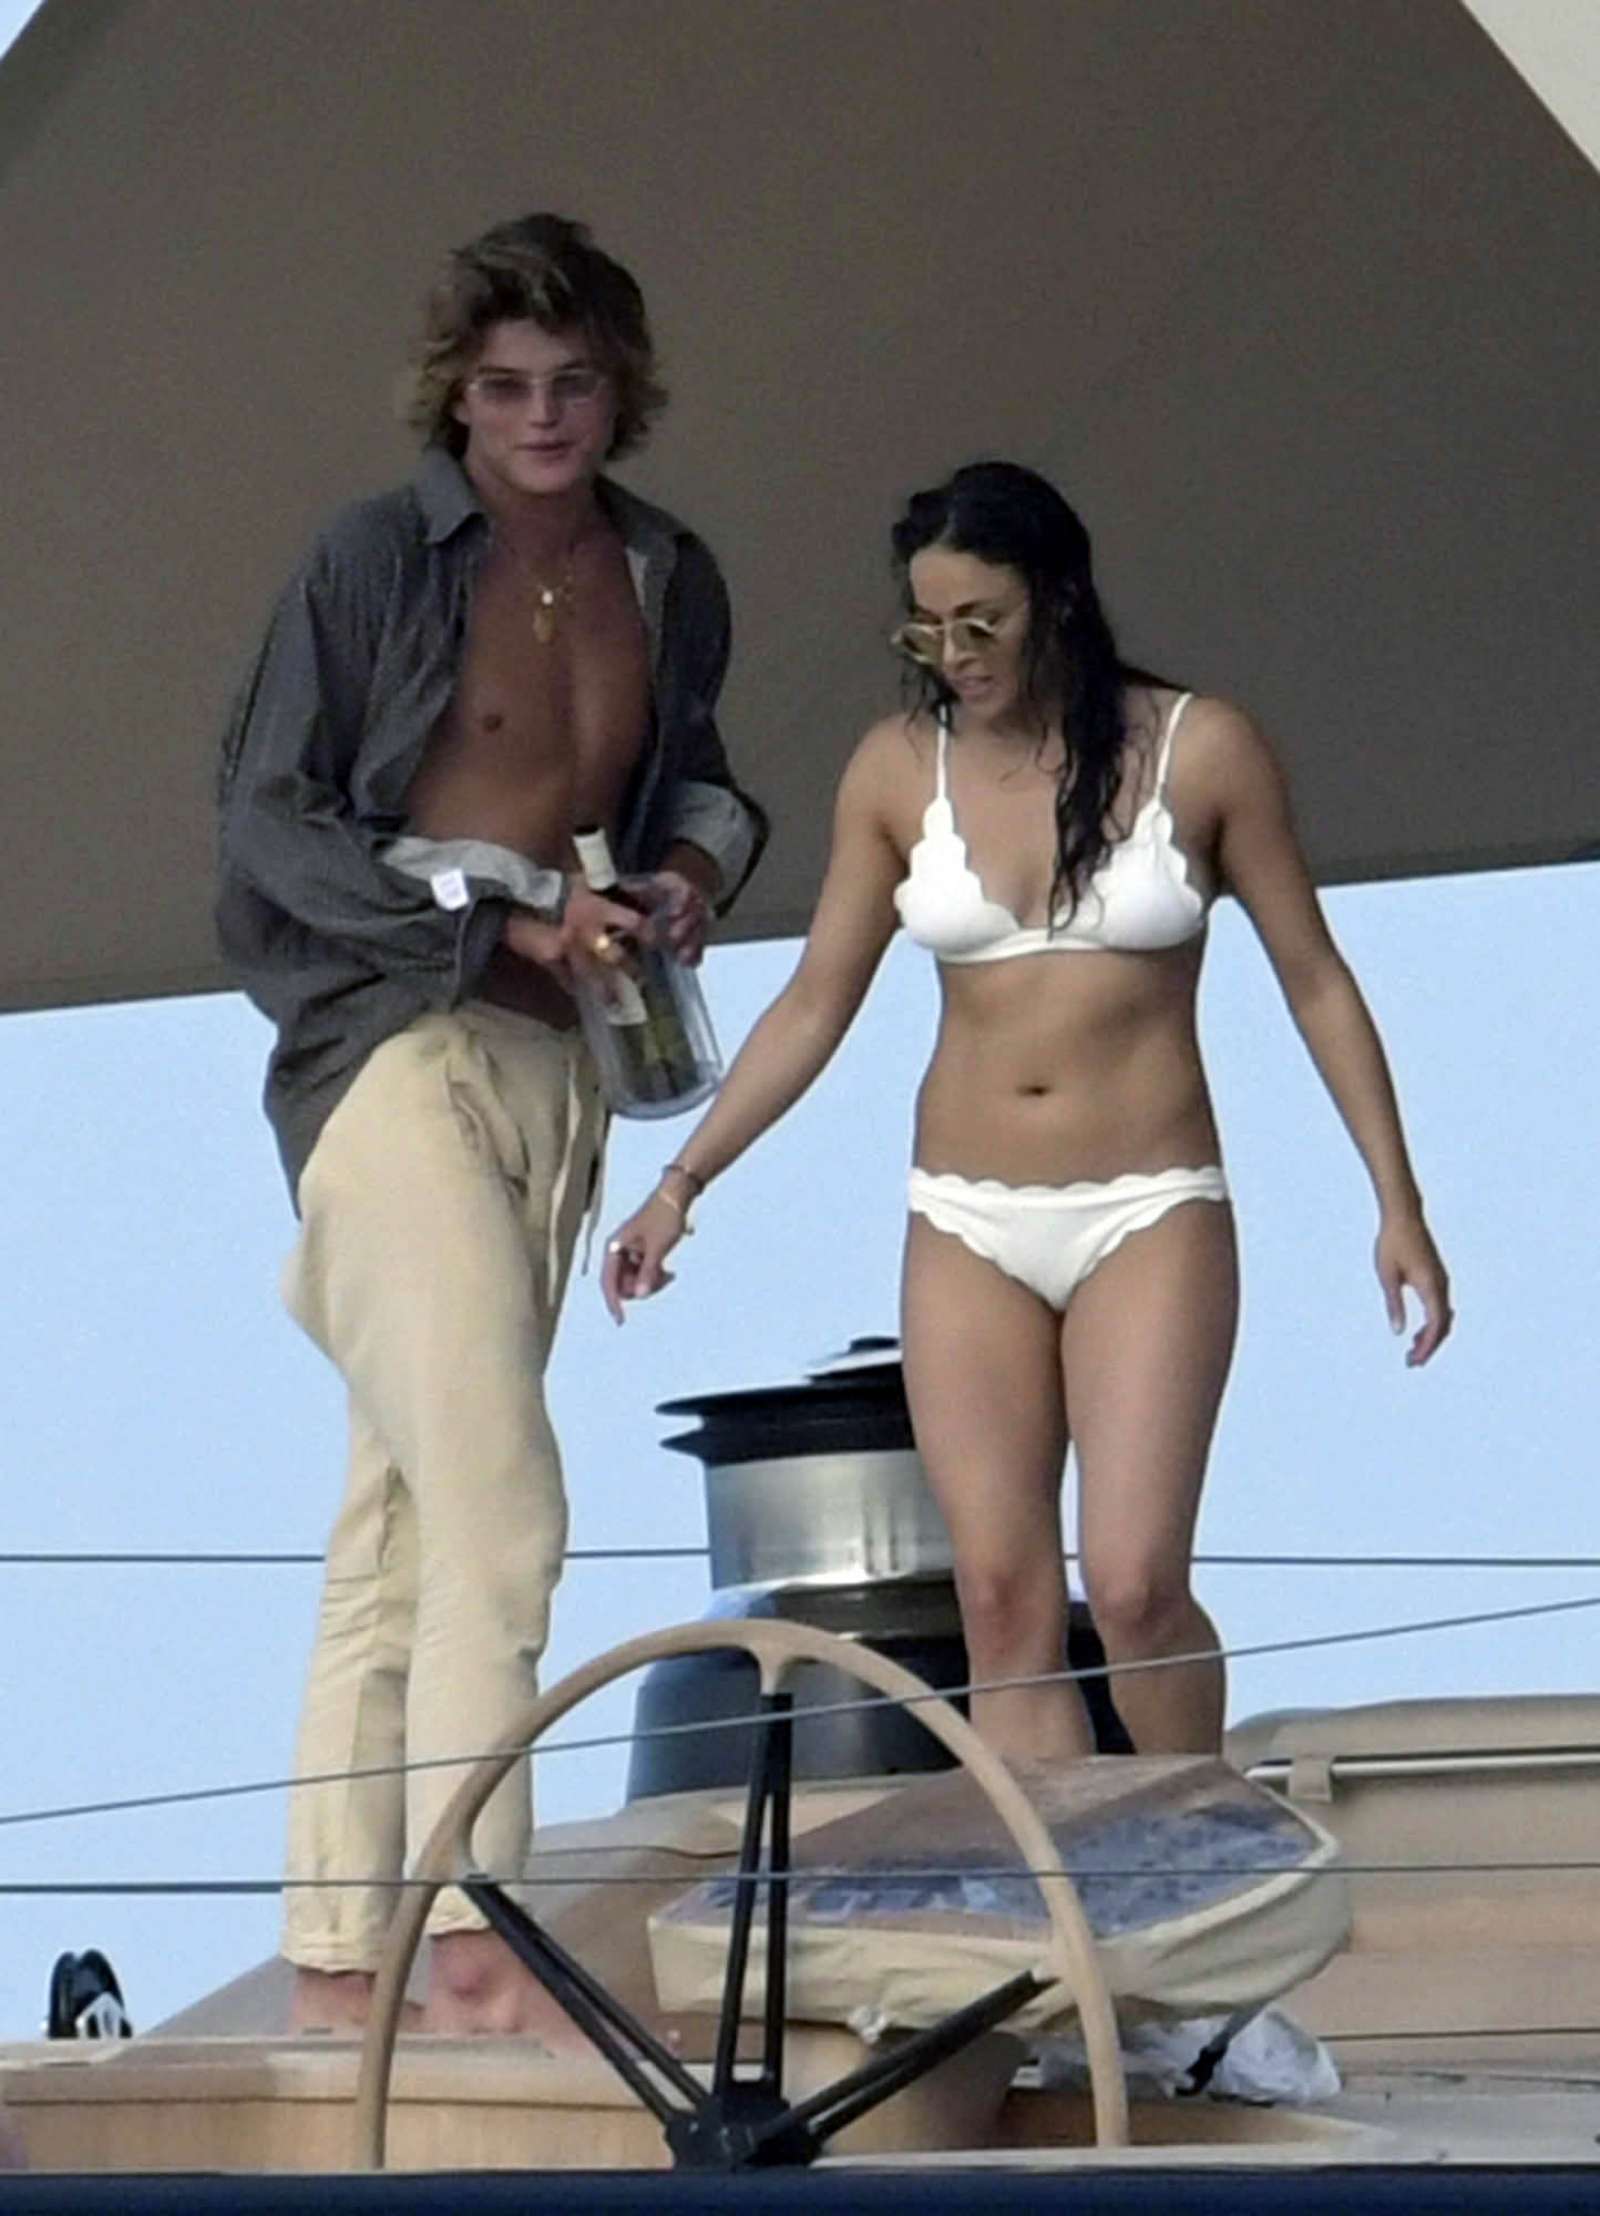 Michelle Rodriguez in White Bikini at the boat in Italy